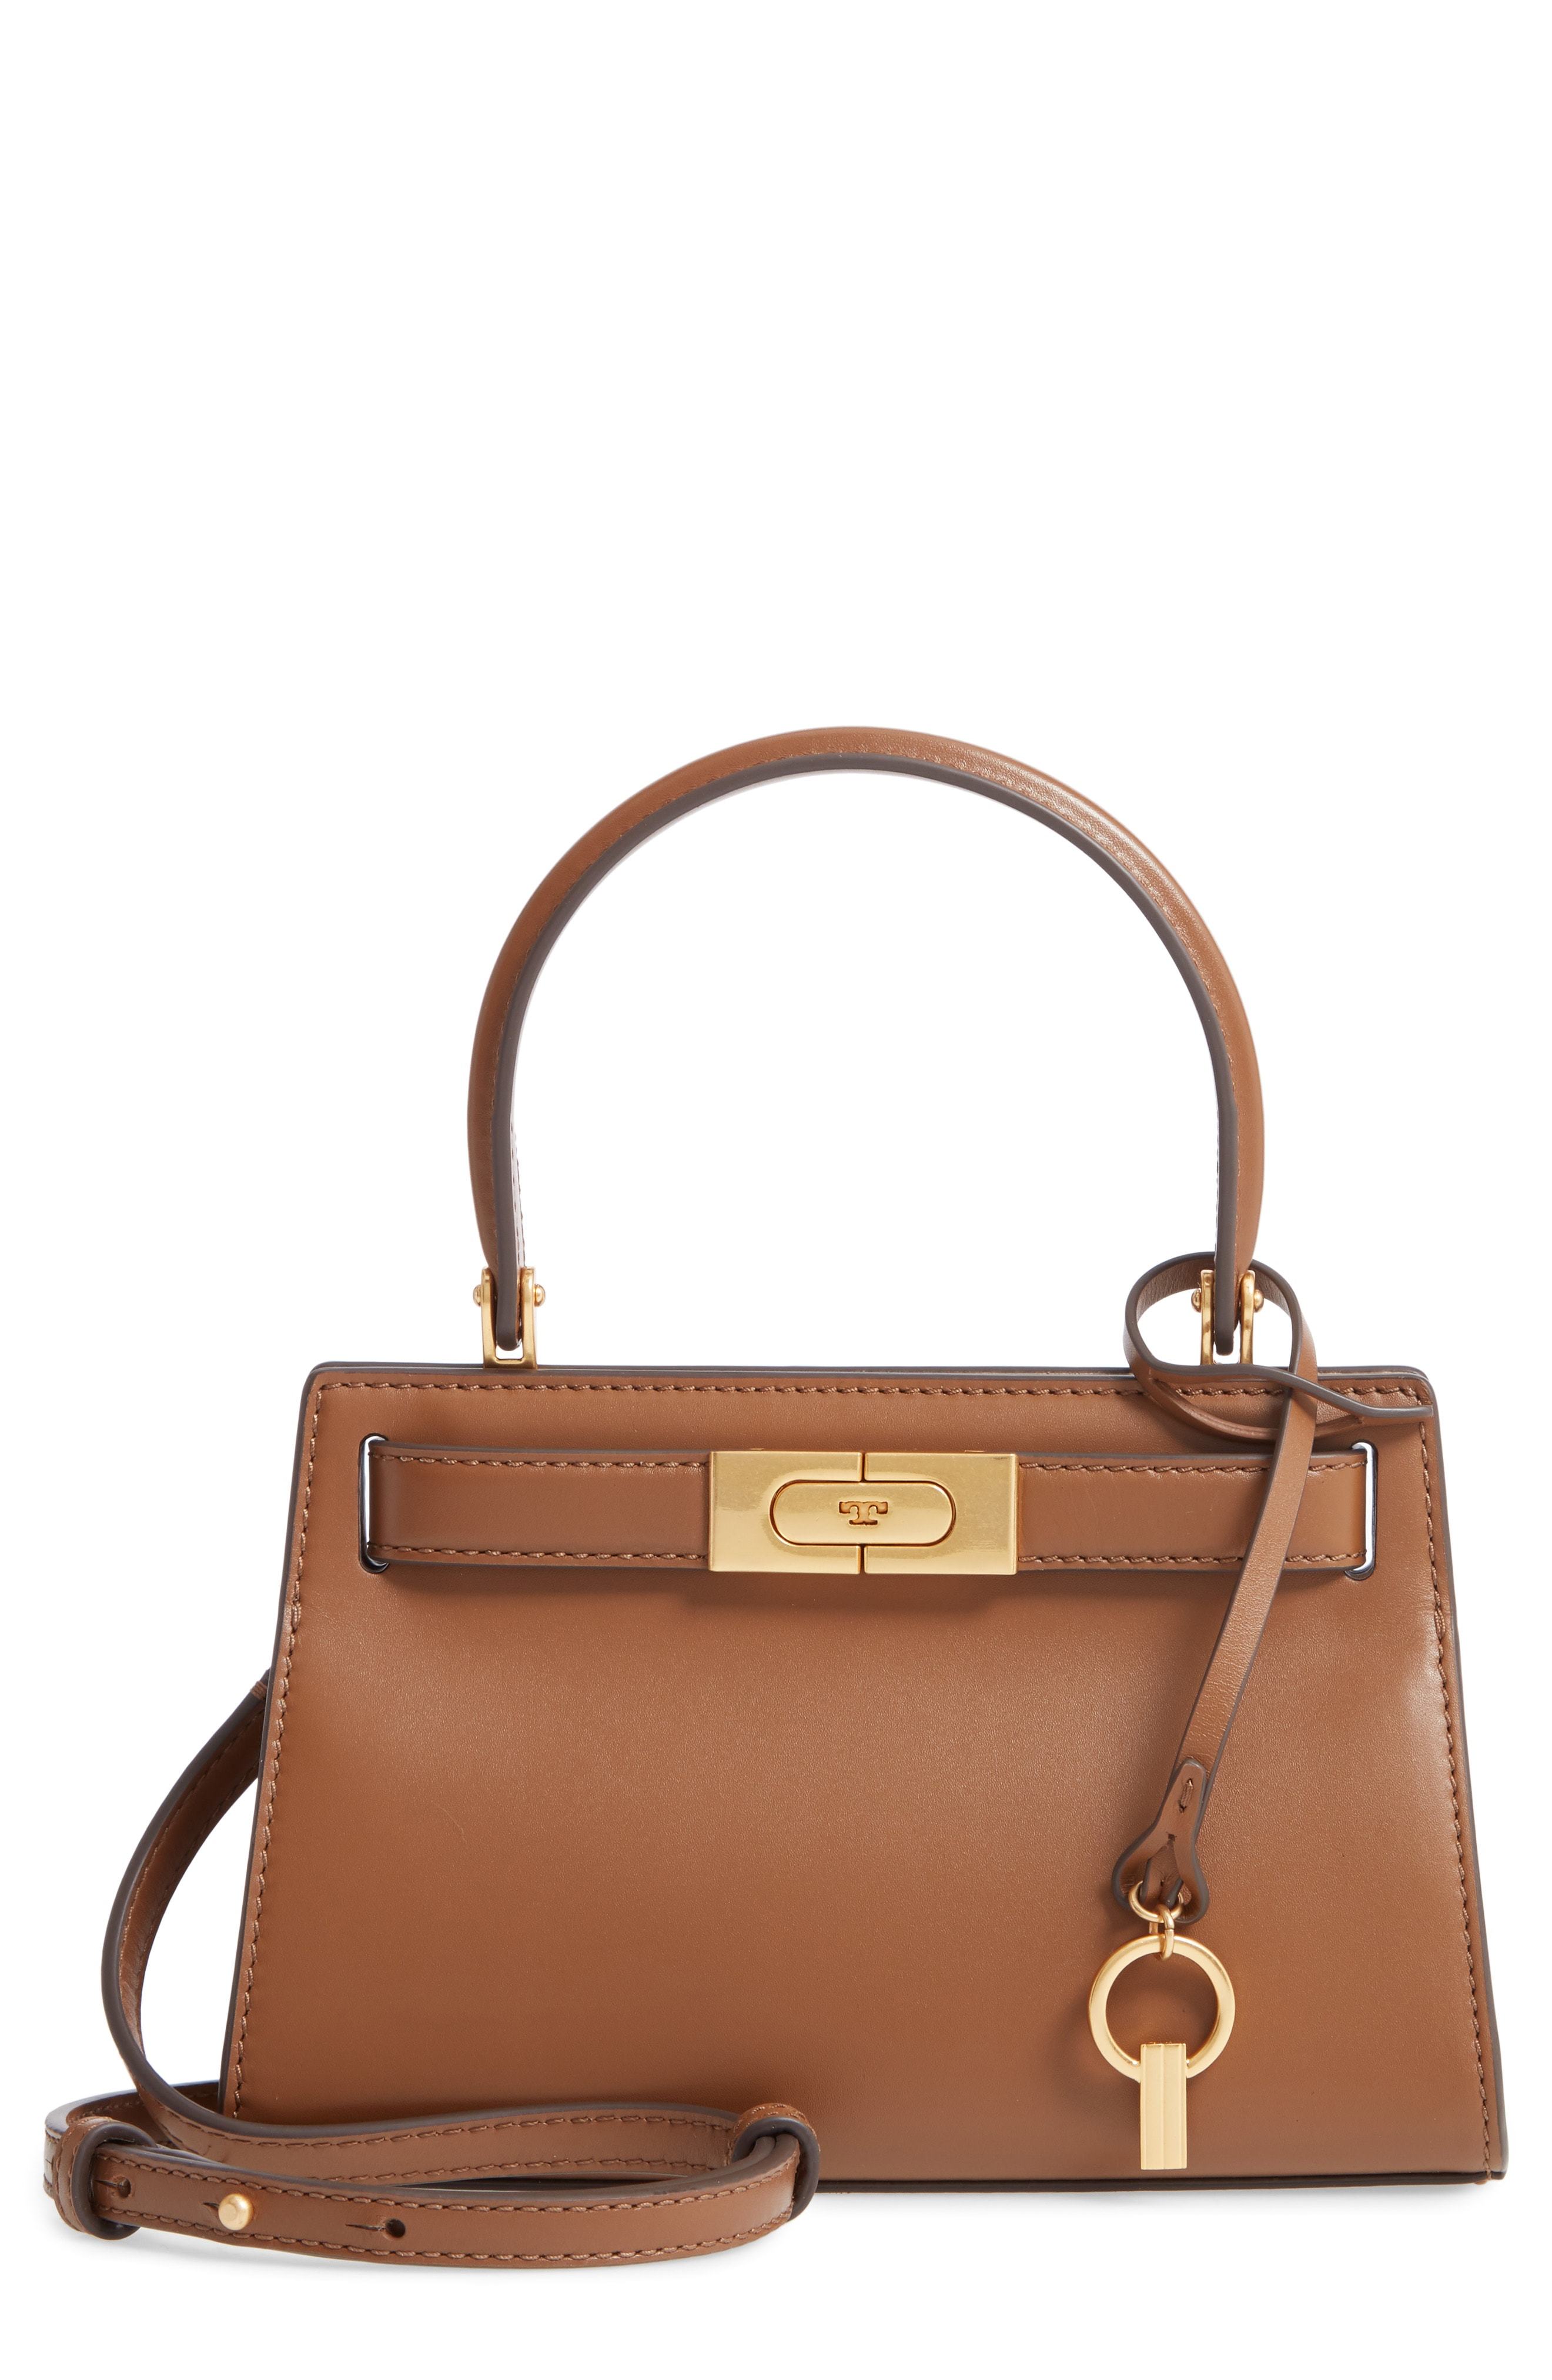 Tory Burch Mini Lee Radziwill Leather Bag, $548 | Nordstrom | Lookastic